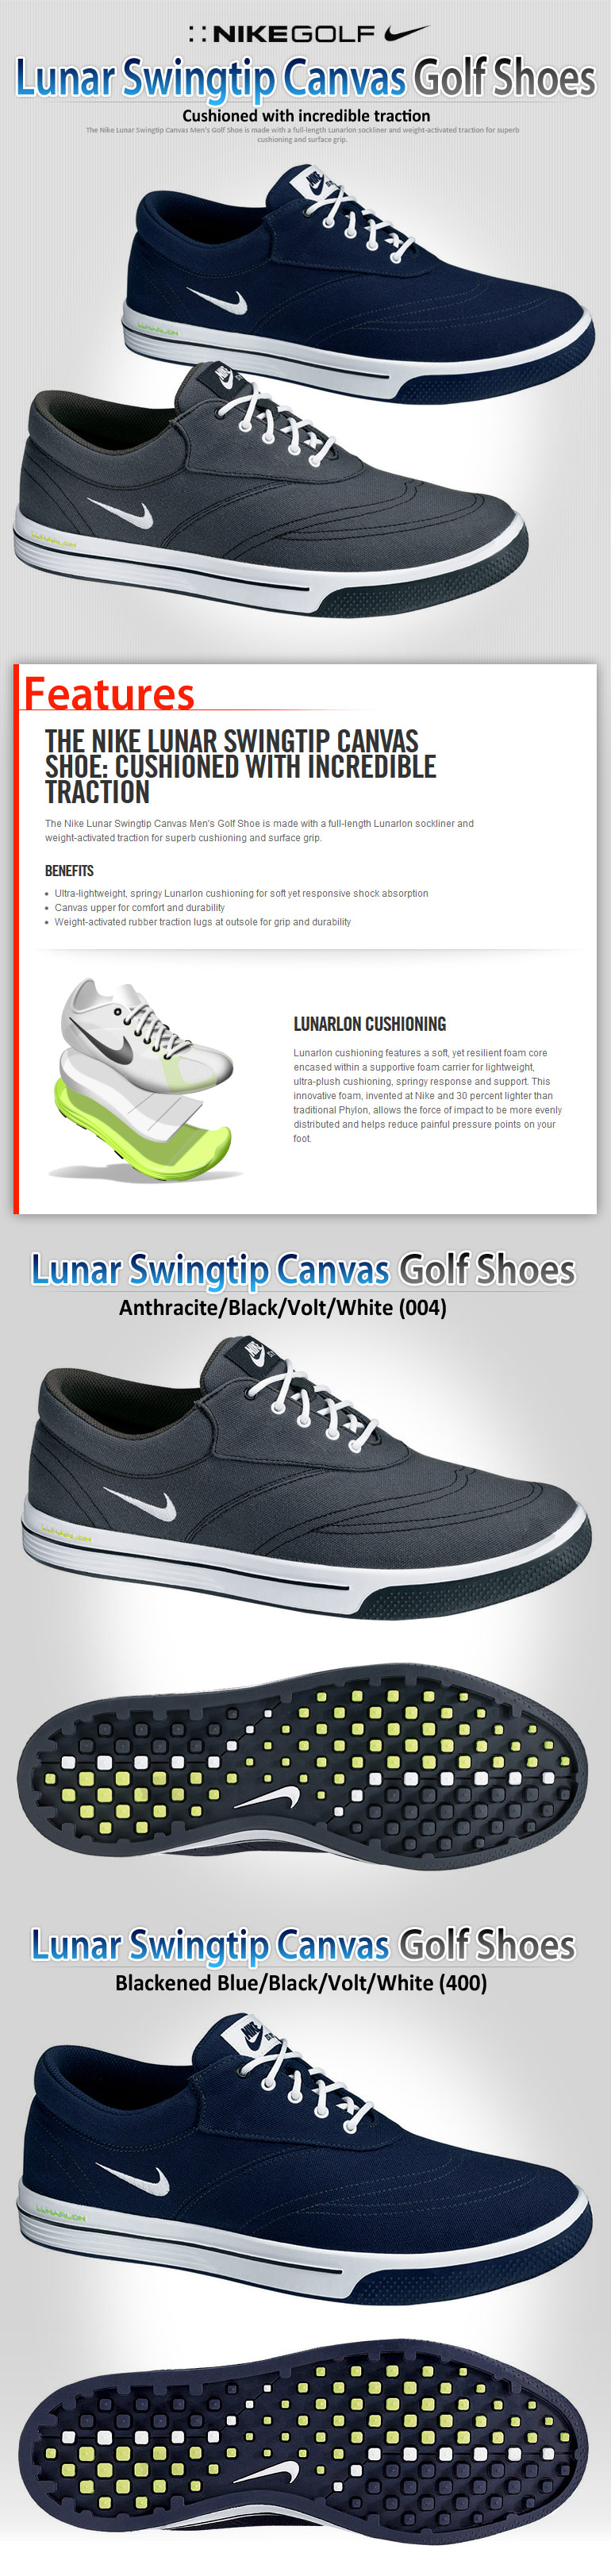 nike lunar swingtip canvas golf shoes